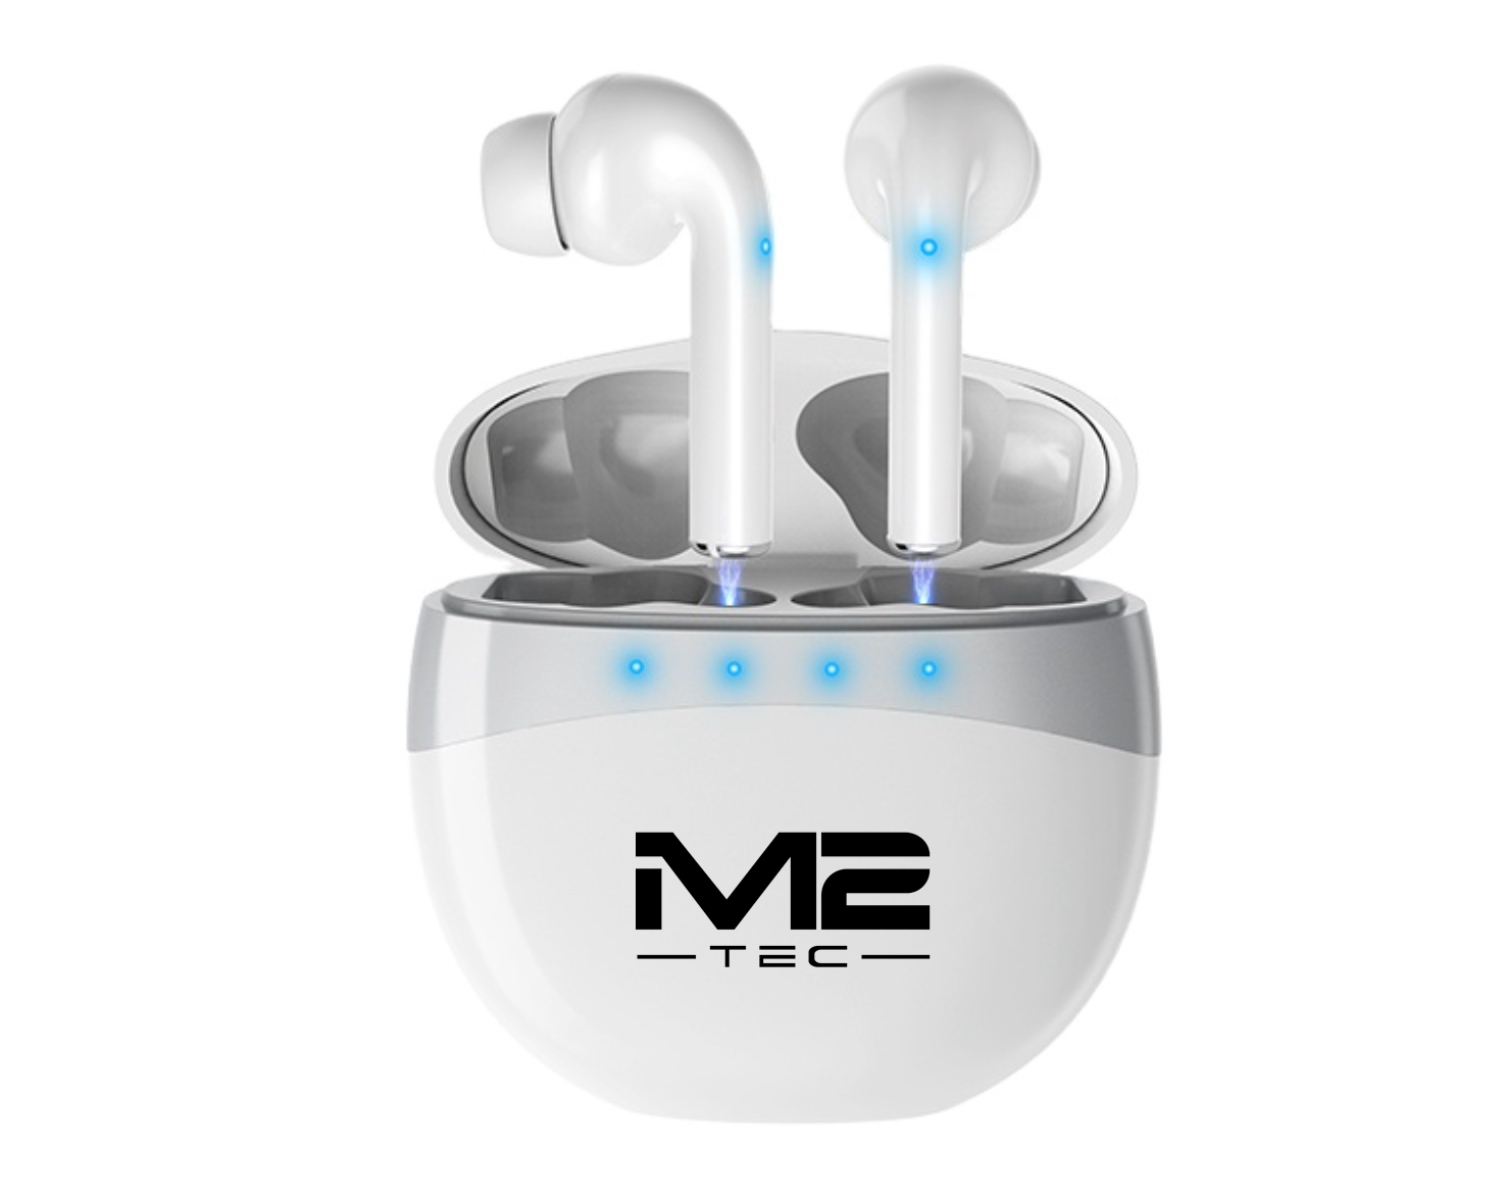 M2-TEC Kopfhörer, Kopfhörer Bluetooth Weiß In-ear